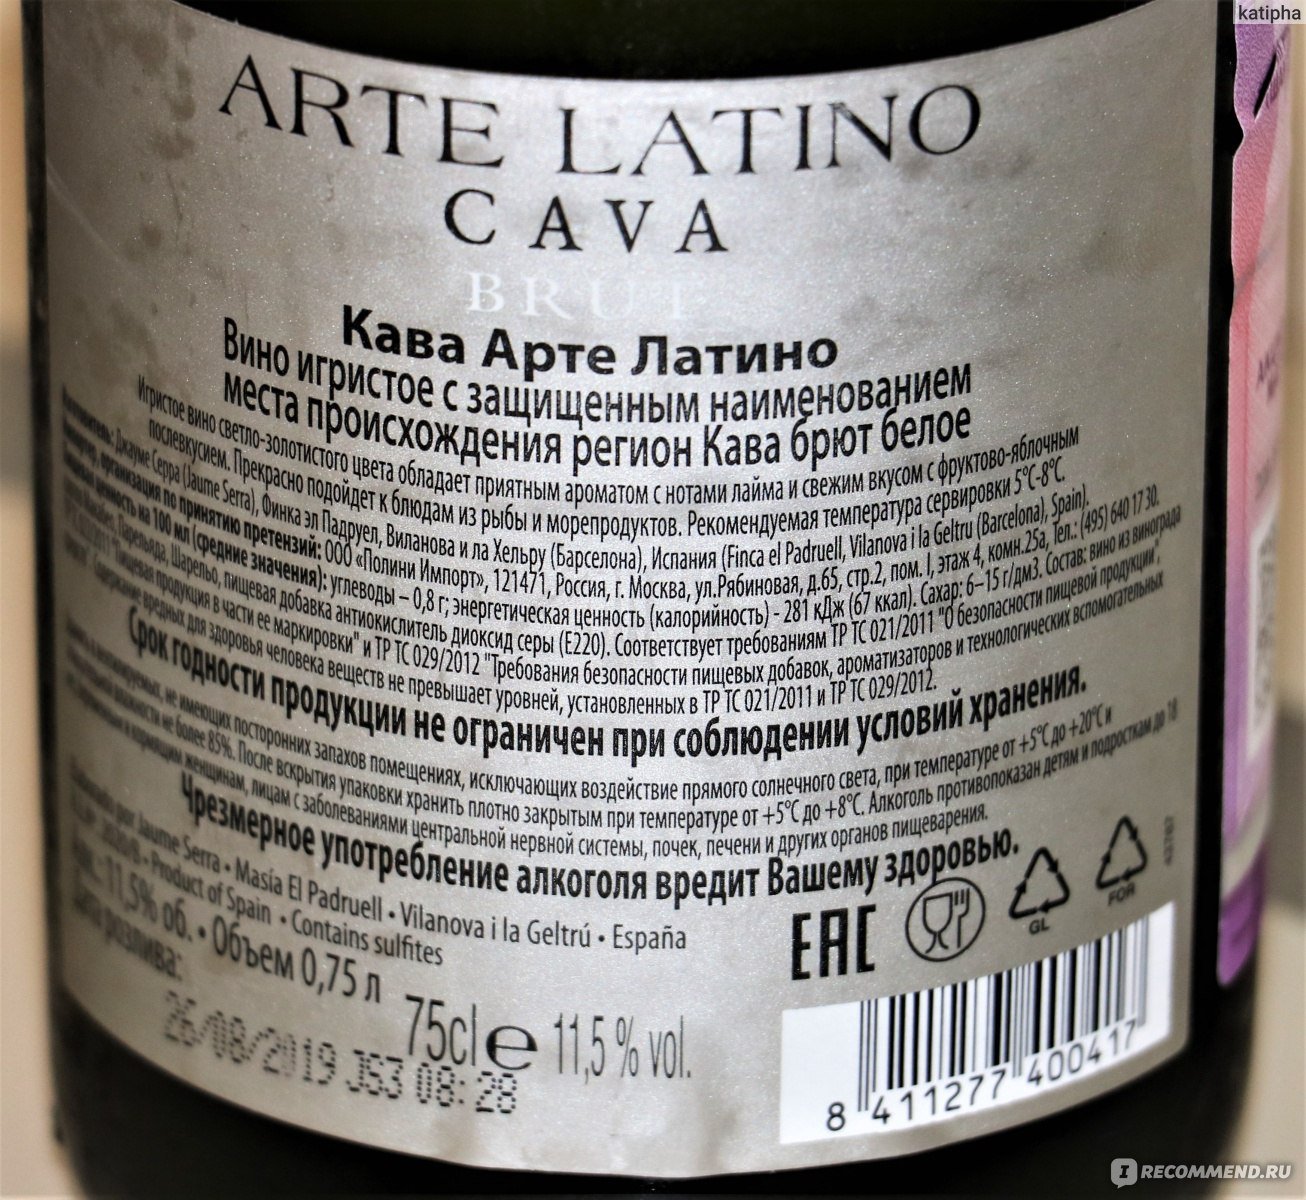 Cava arte latino brut. Cava Latino Brut. Вино игристое Arte Latino. Вино игристое кава арте латино. Игристое вино Arte Latino Cava Brut.